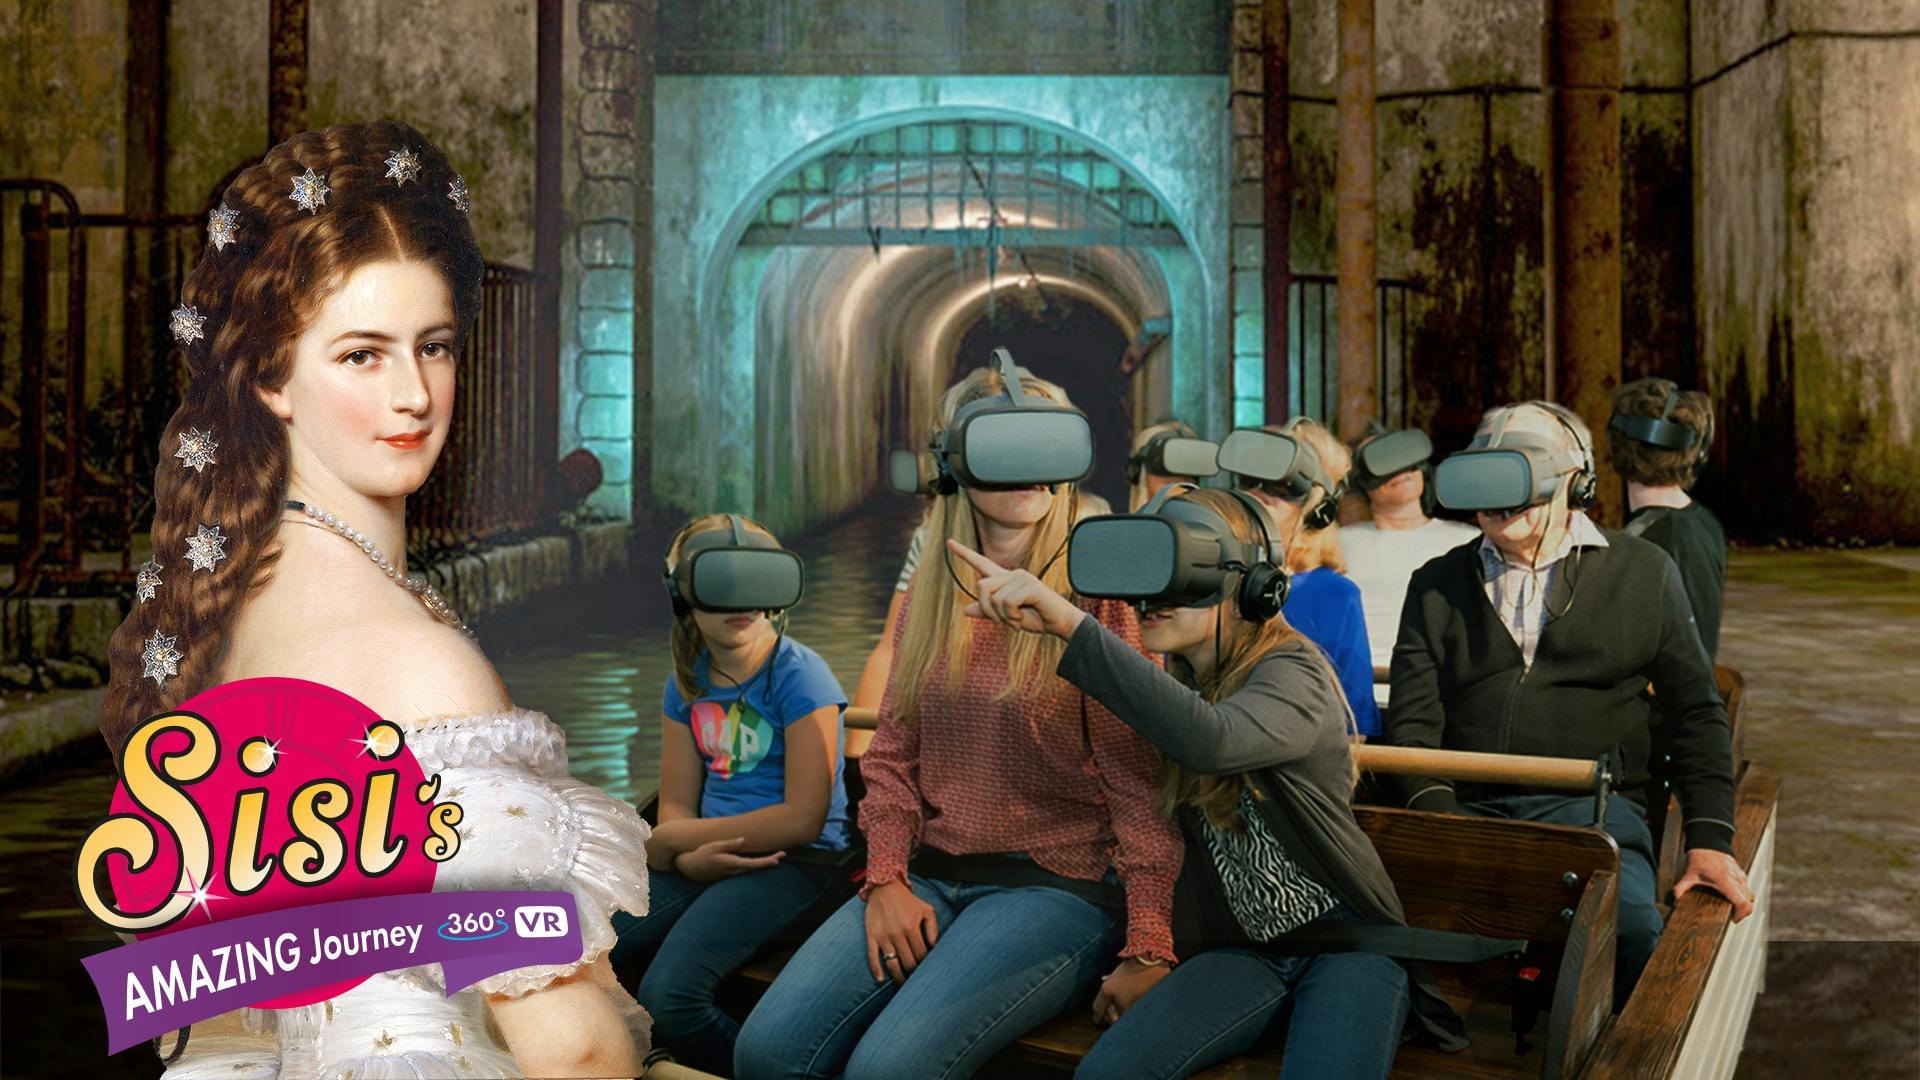 A incrível jornada de Sisi, passeio de barco em realidade virtual